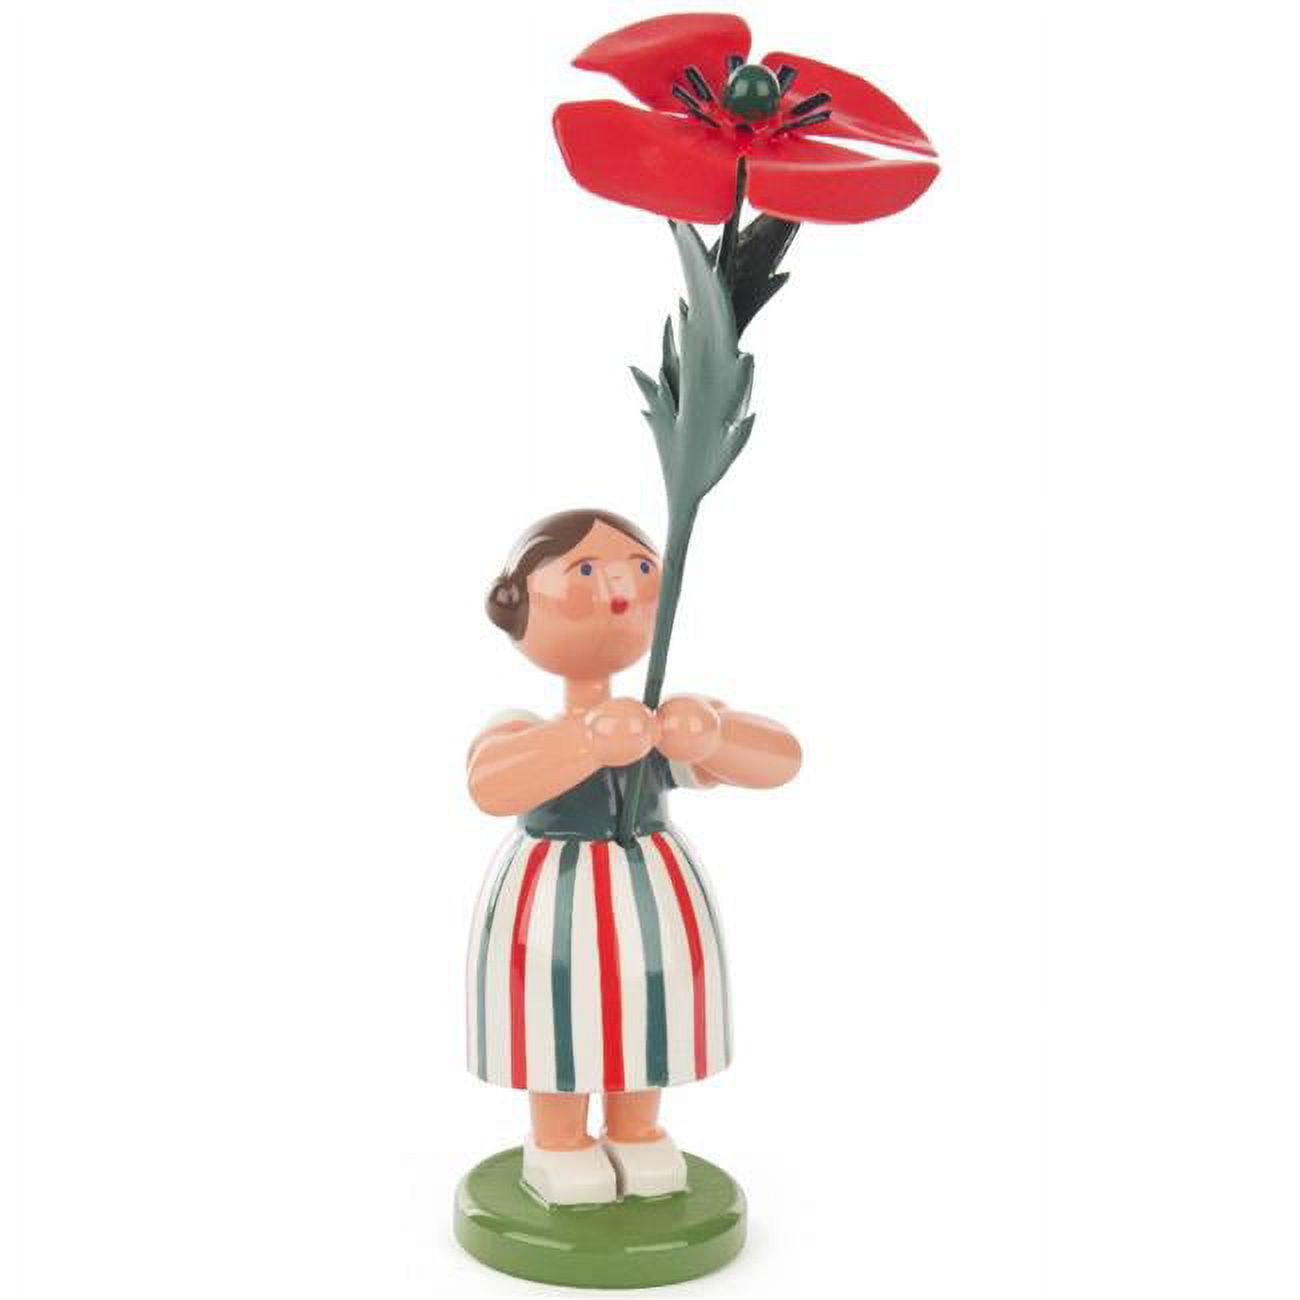 Picture of Alexander Taron 013-2011 Dregno Easter Figurine - Poppy Flower Girl - 4.5 x 1.25 x 1.25 in.